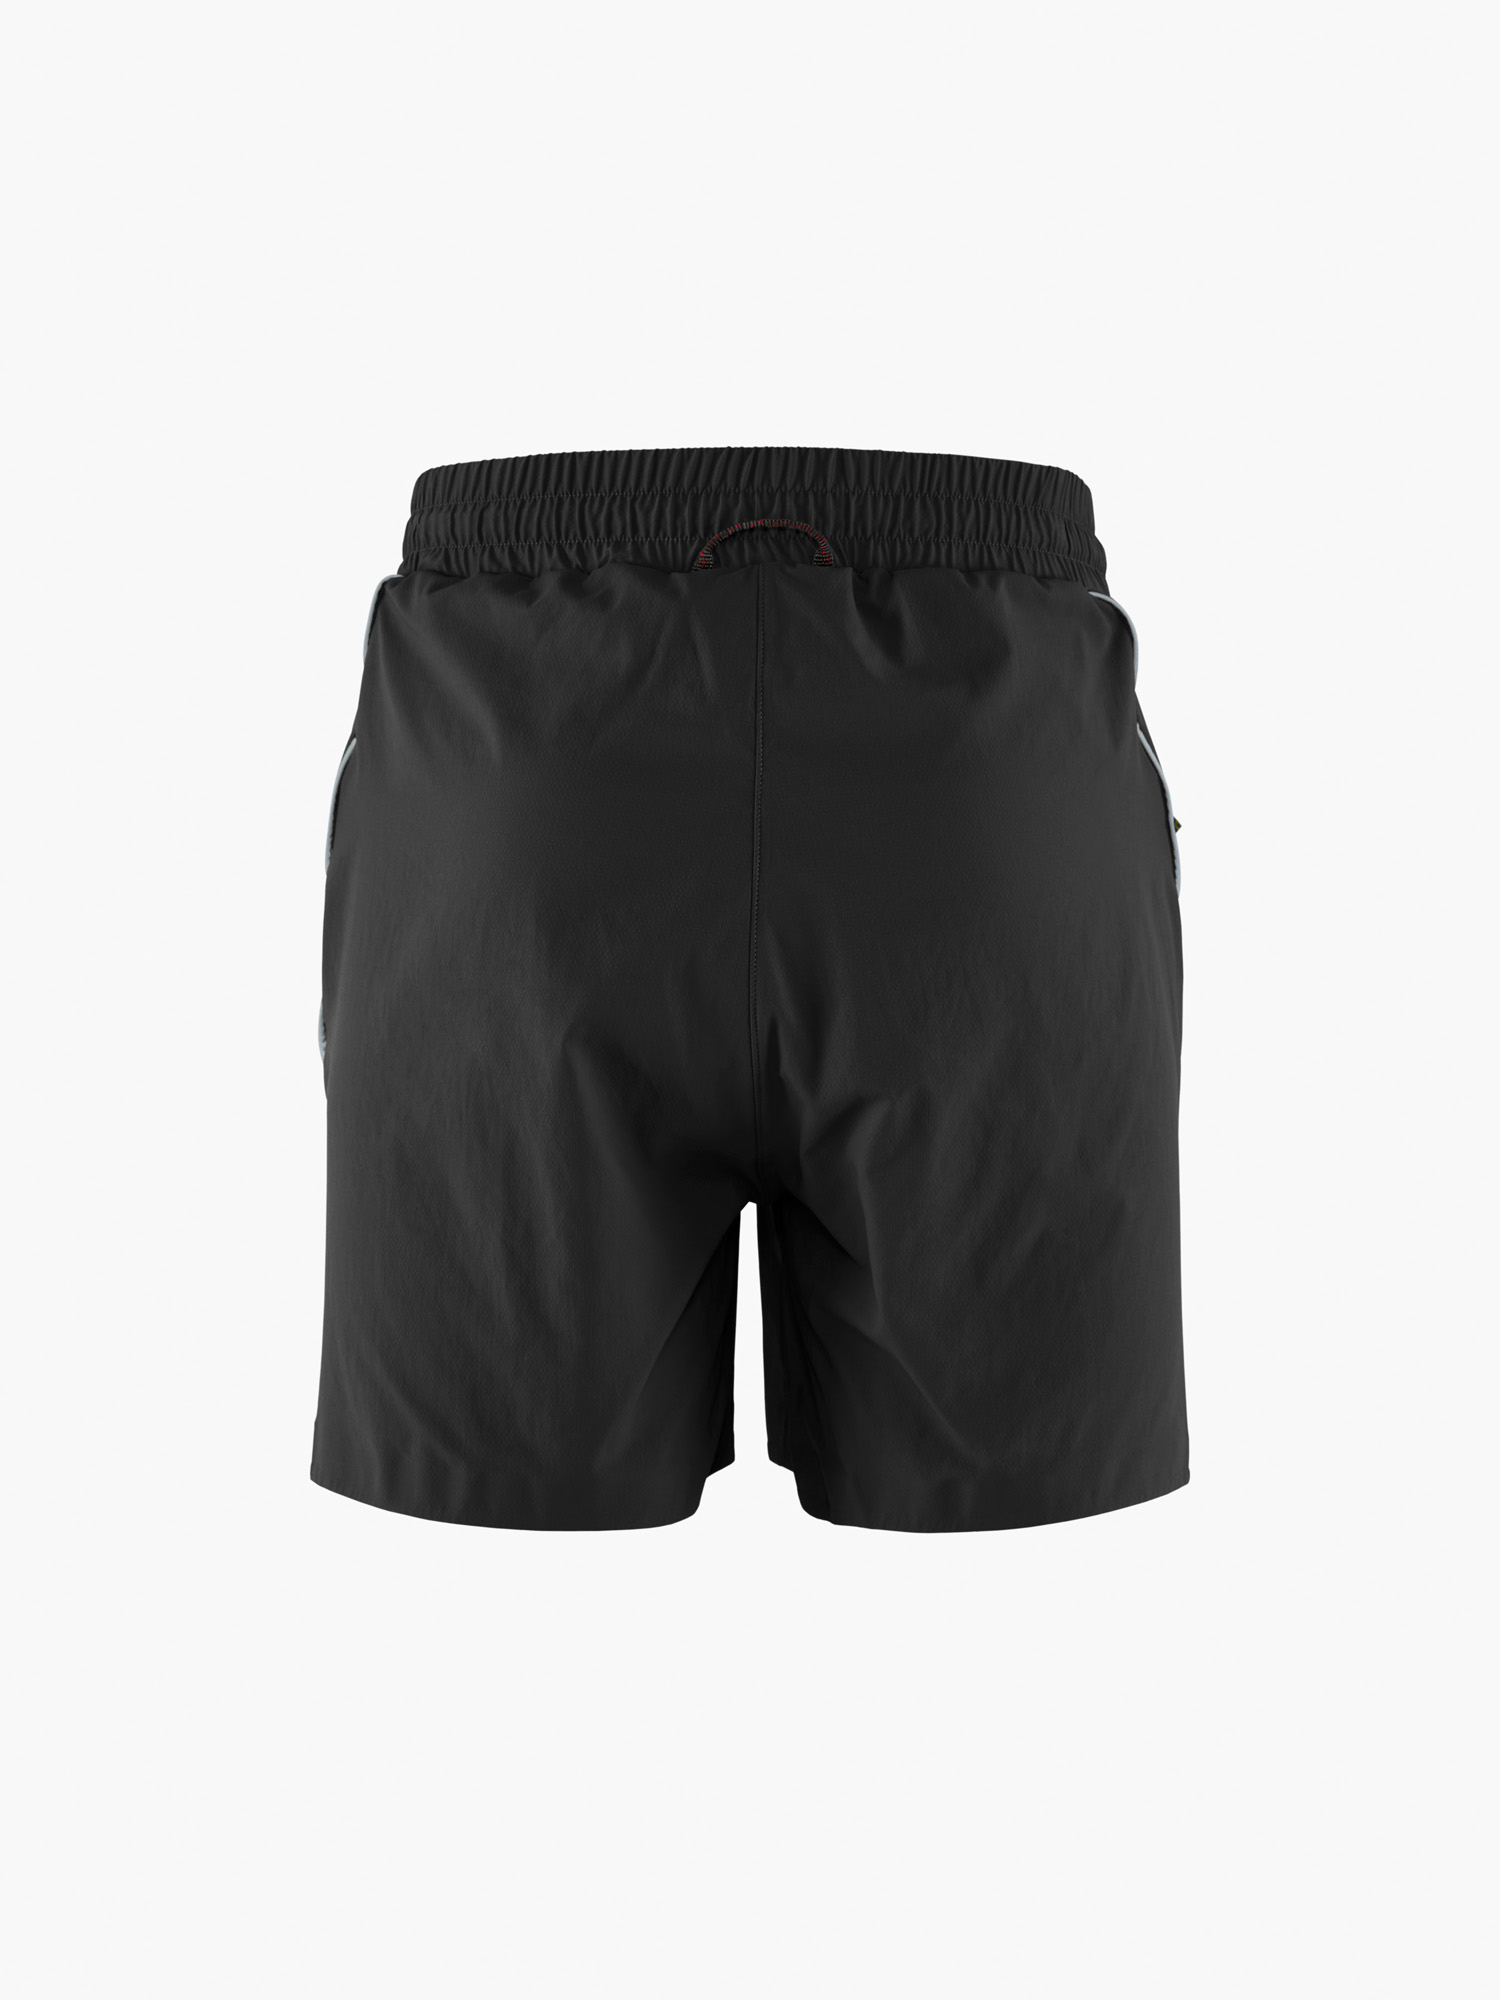 15600M21 - Laufey Shorts M's - Black